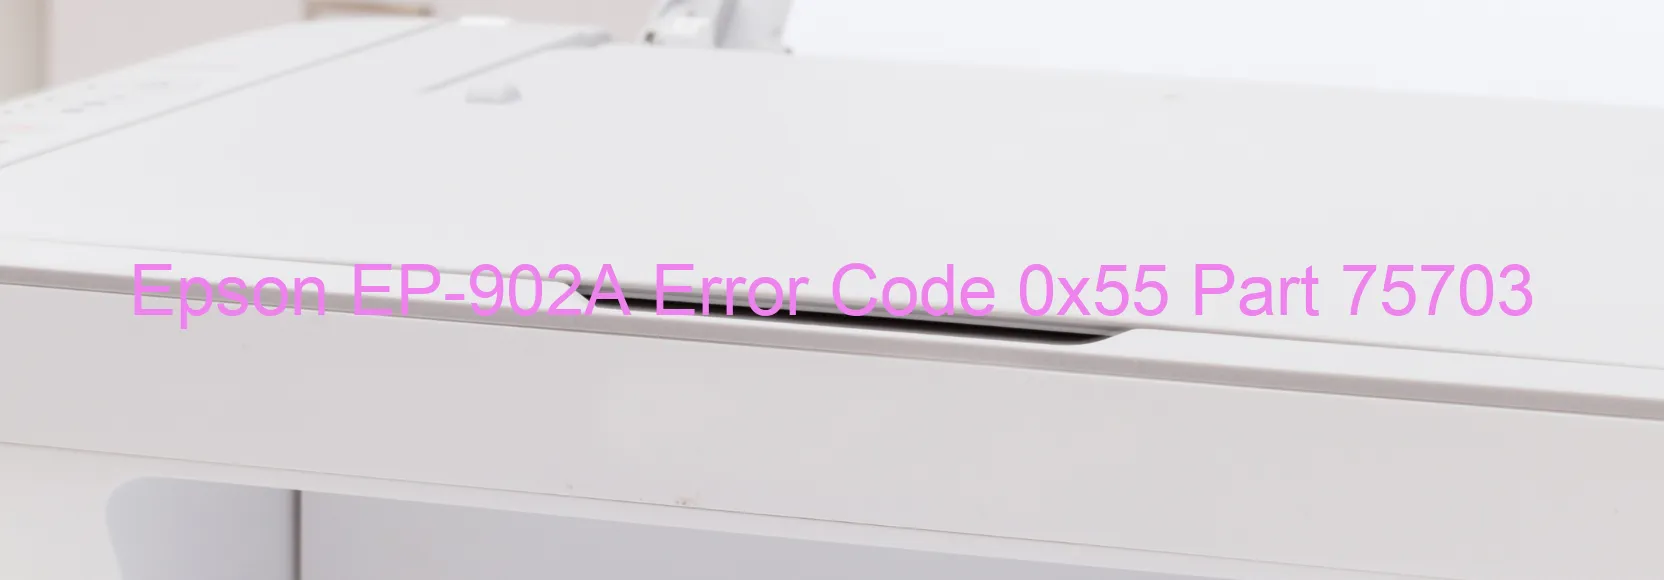 Epson EP-902A Error Code 0x55 Part 75703